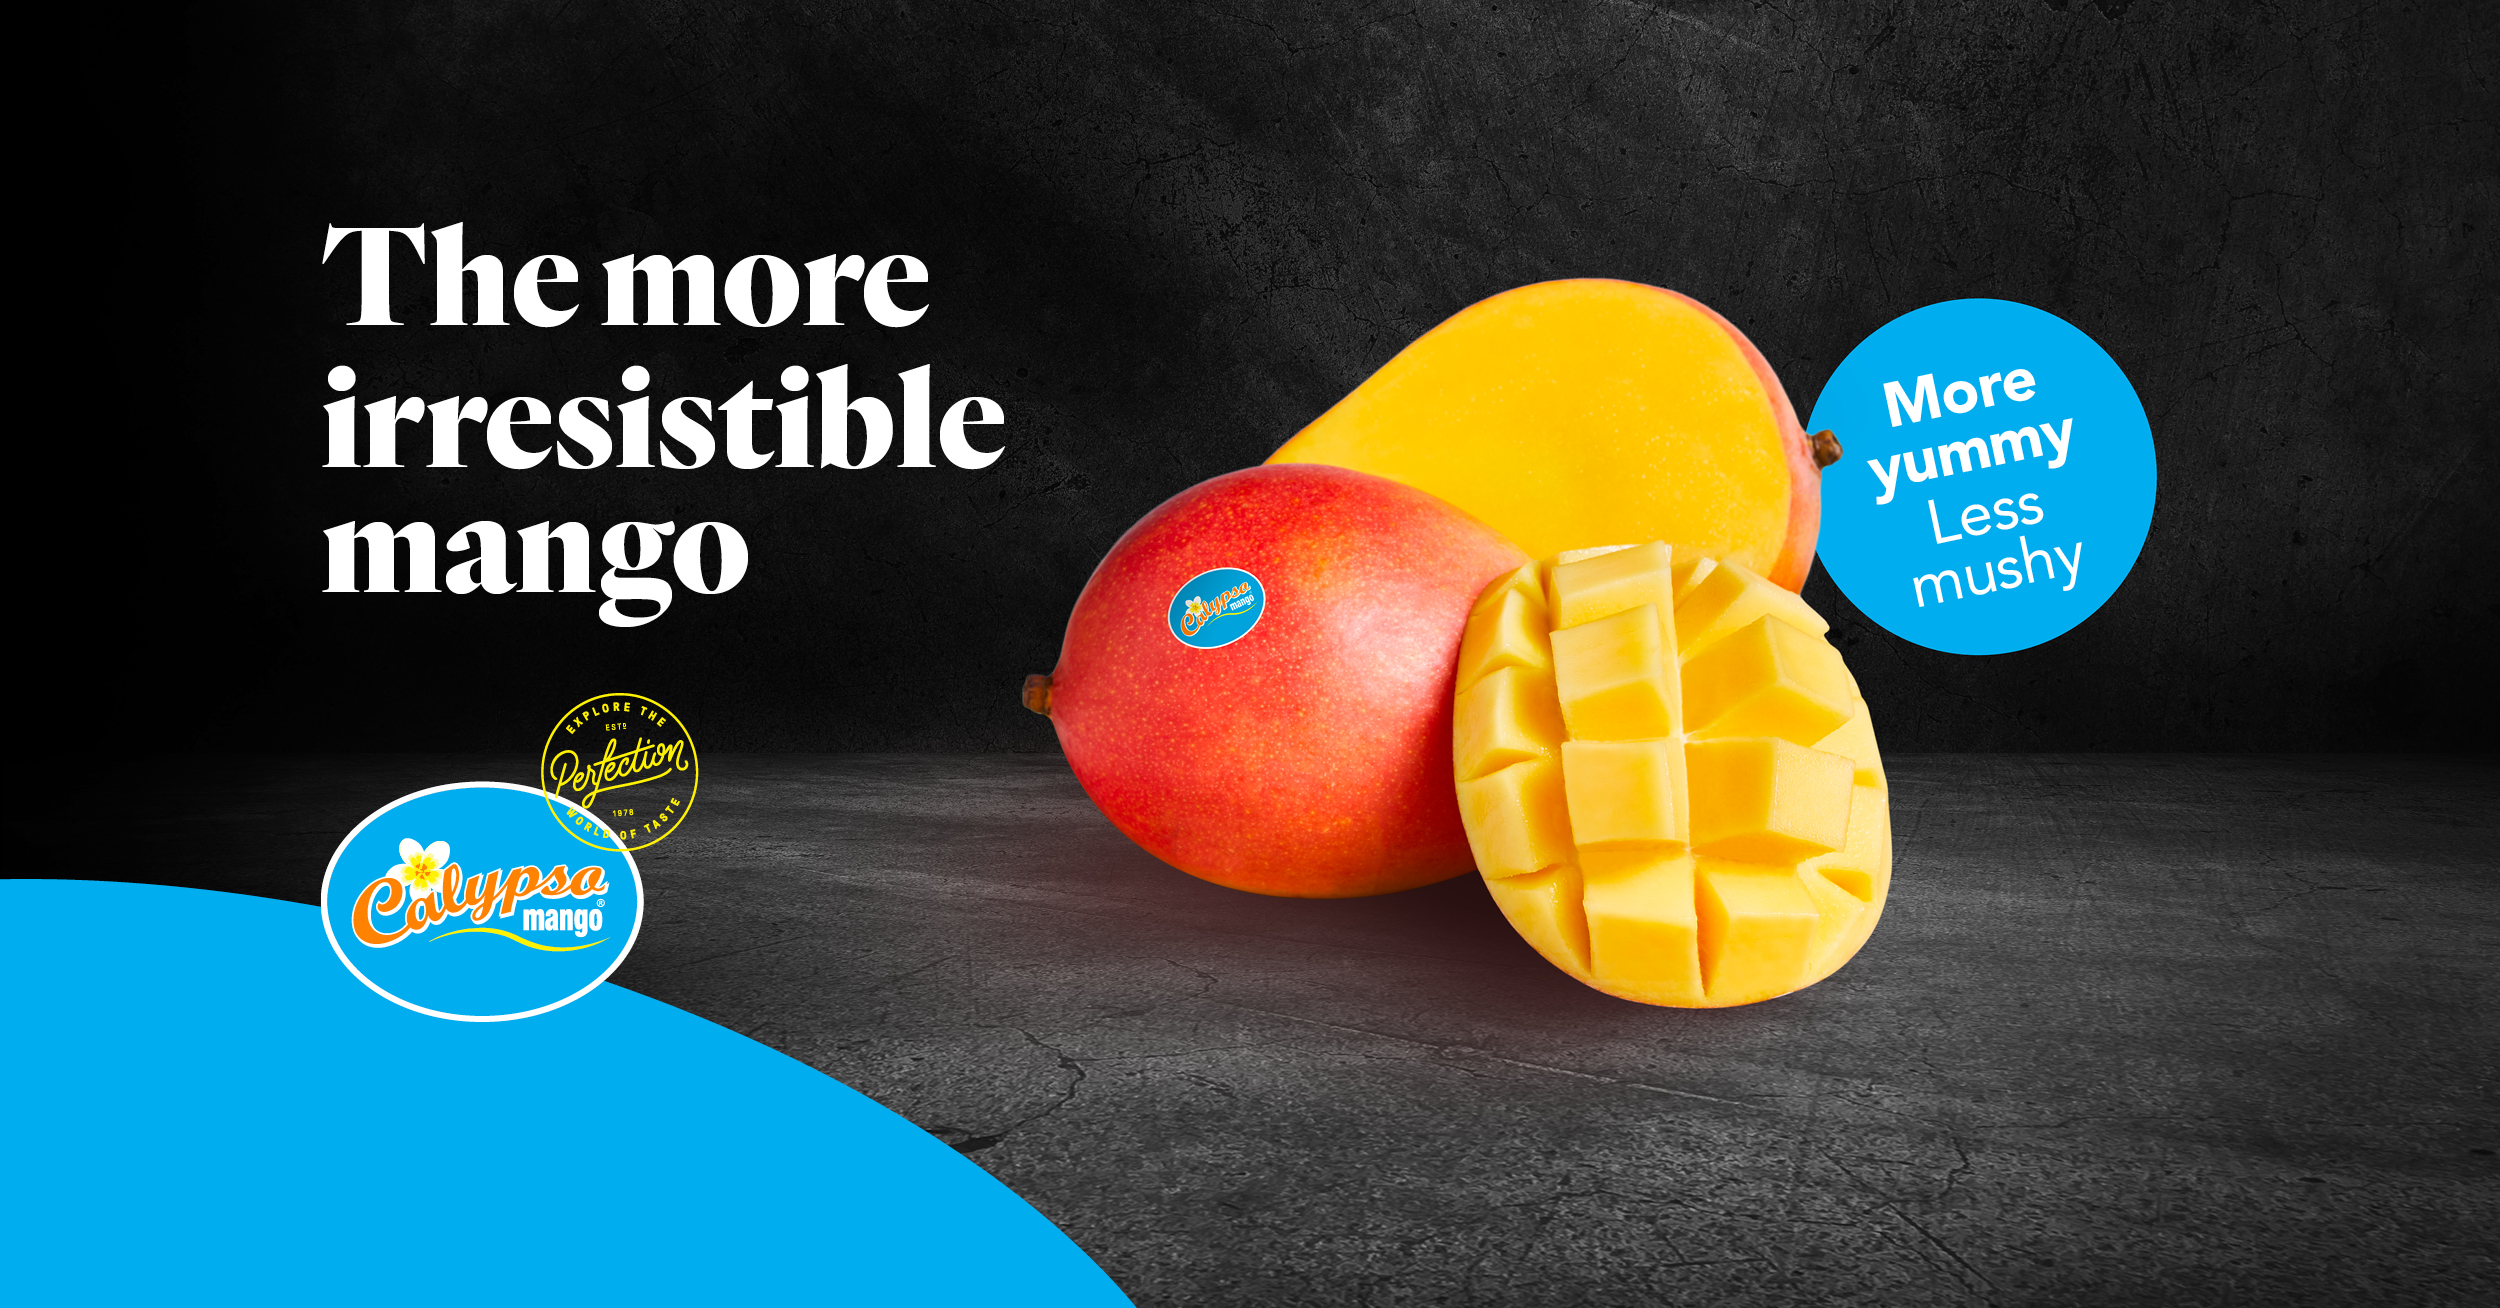 Calypso Mango season is here!